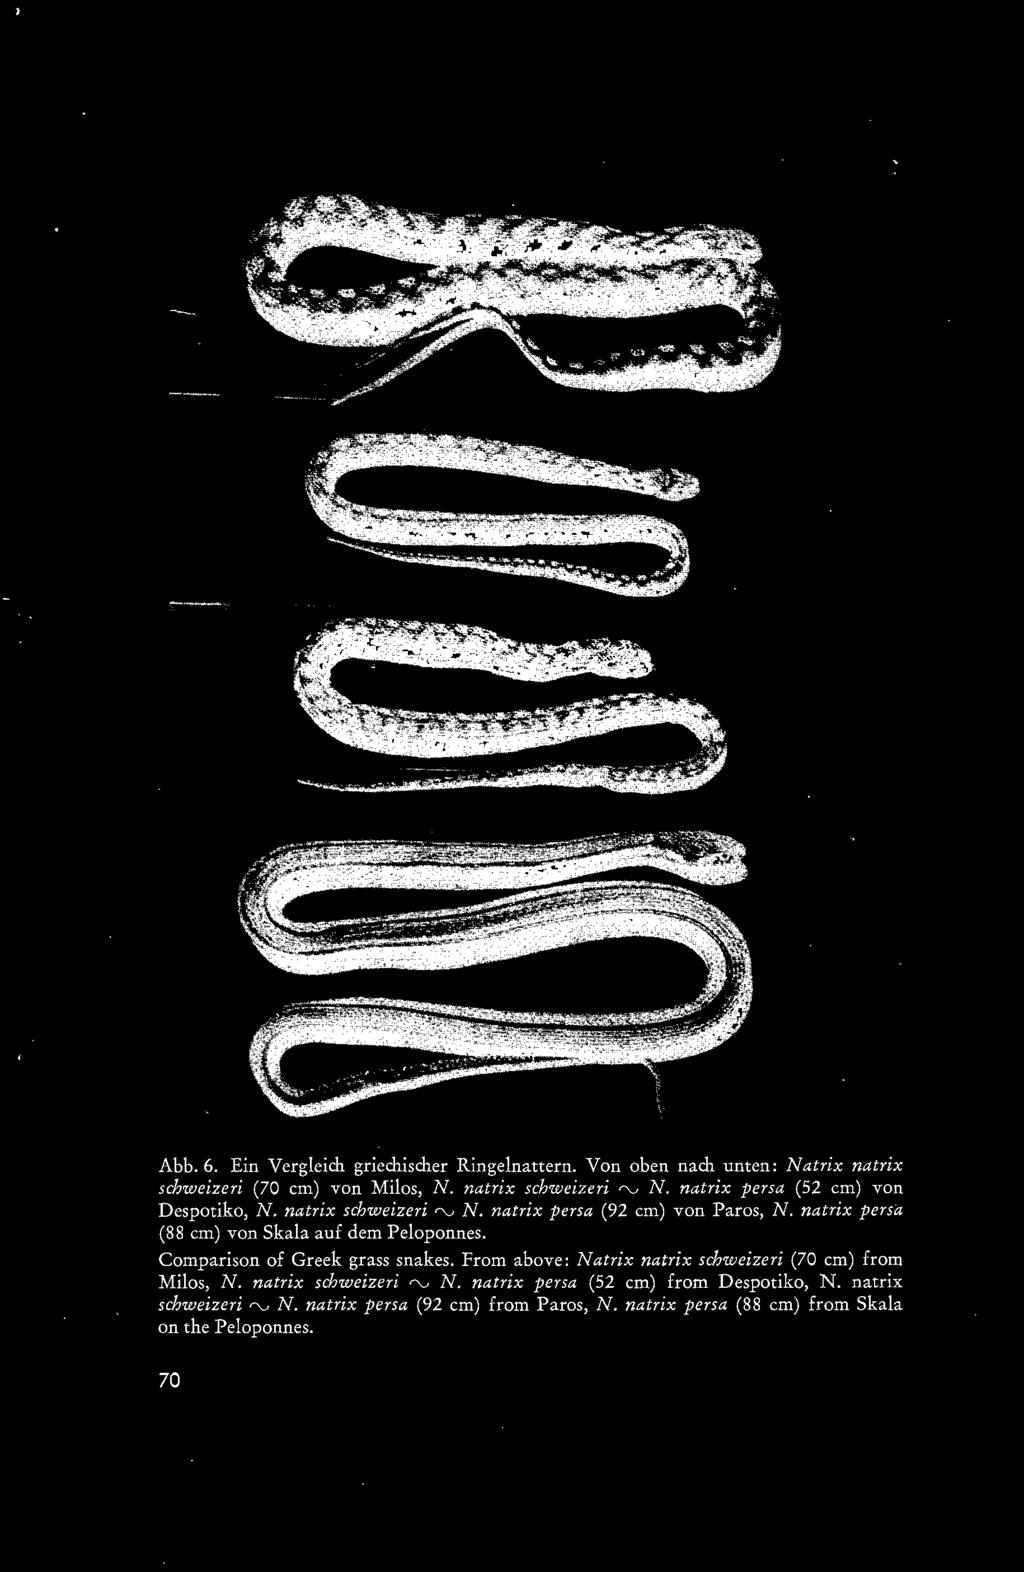 Comparison of Greek grass snakes. From above: Natrix natrix schweizeri (70 cm) from Milos, N.